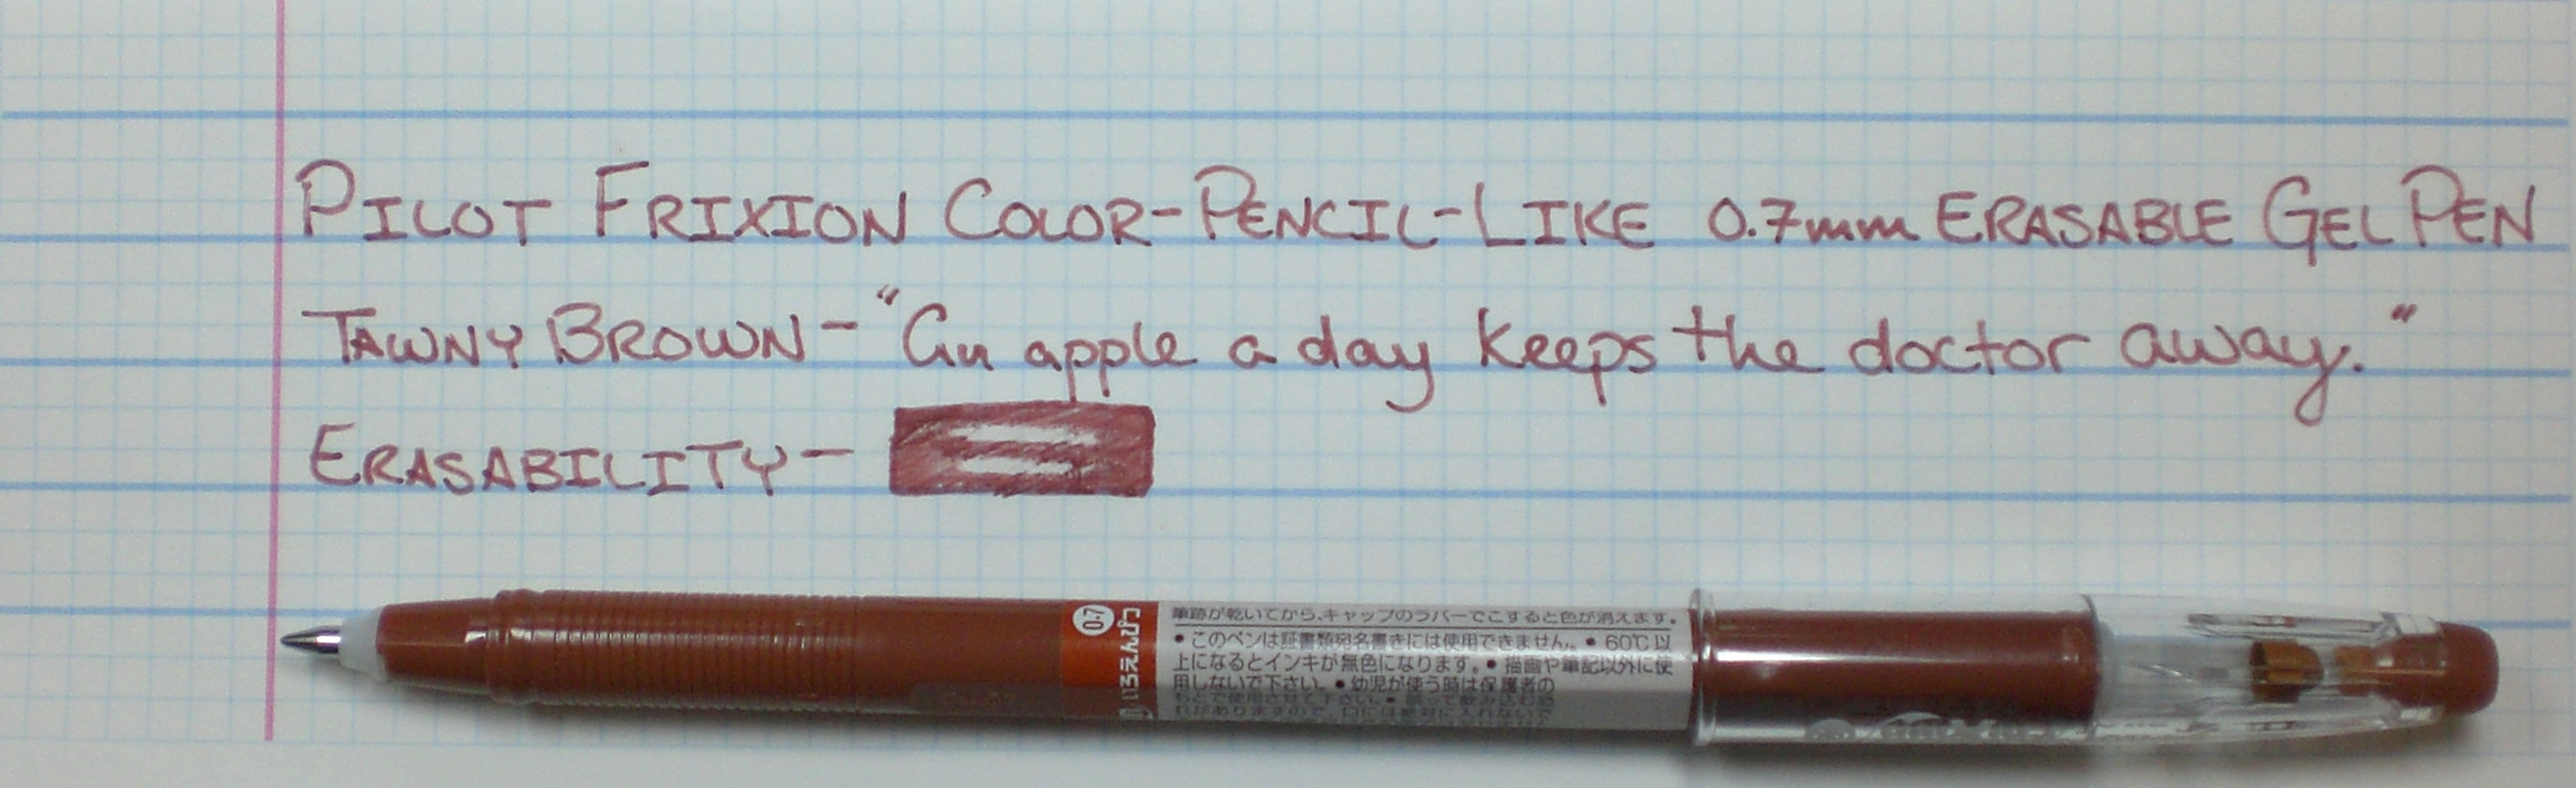 Pilot Frixion Color-Pencil-Like 0.7mm Erasable Gel Pen – Tawny